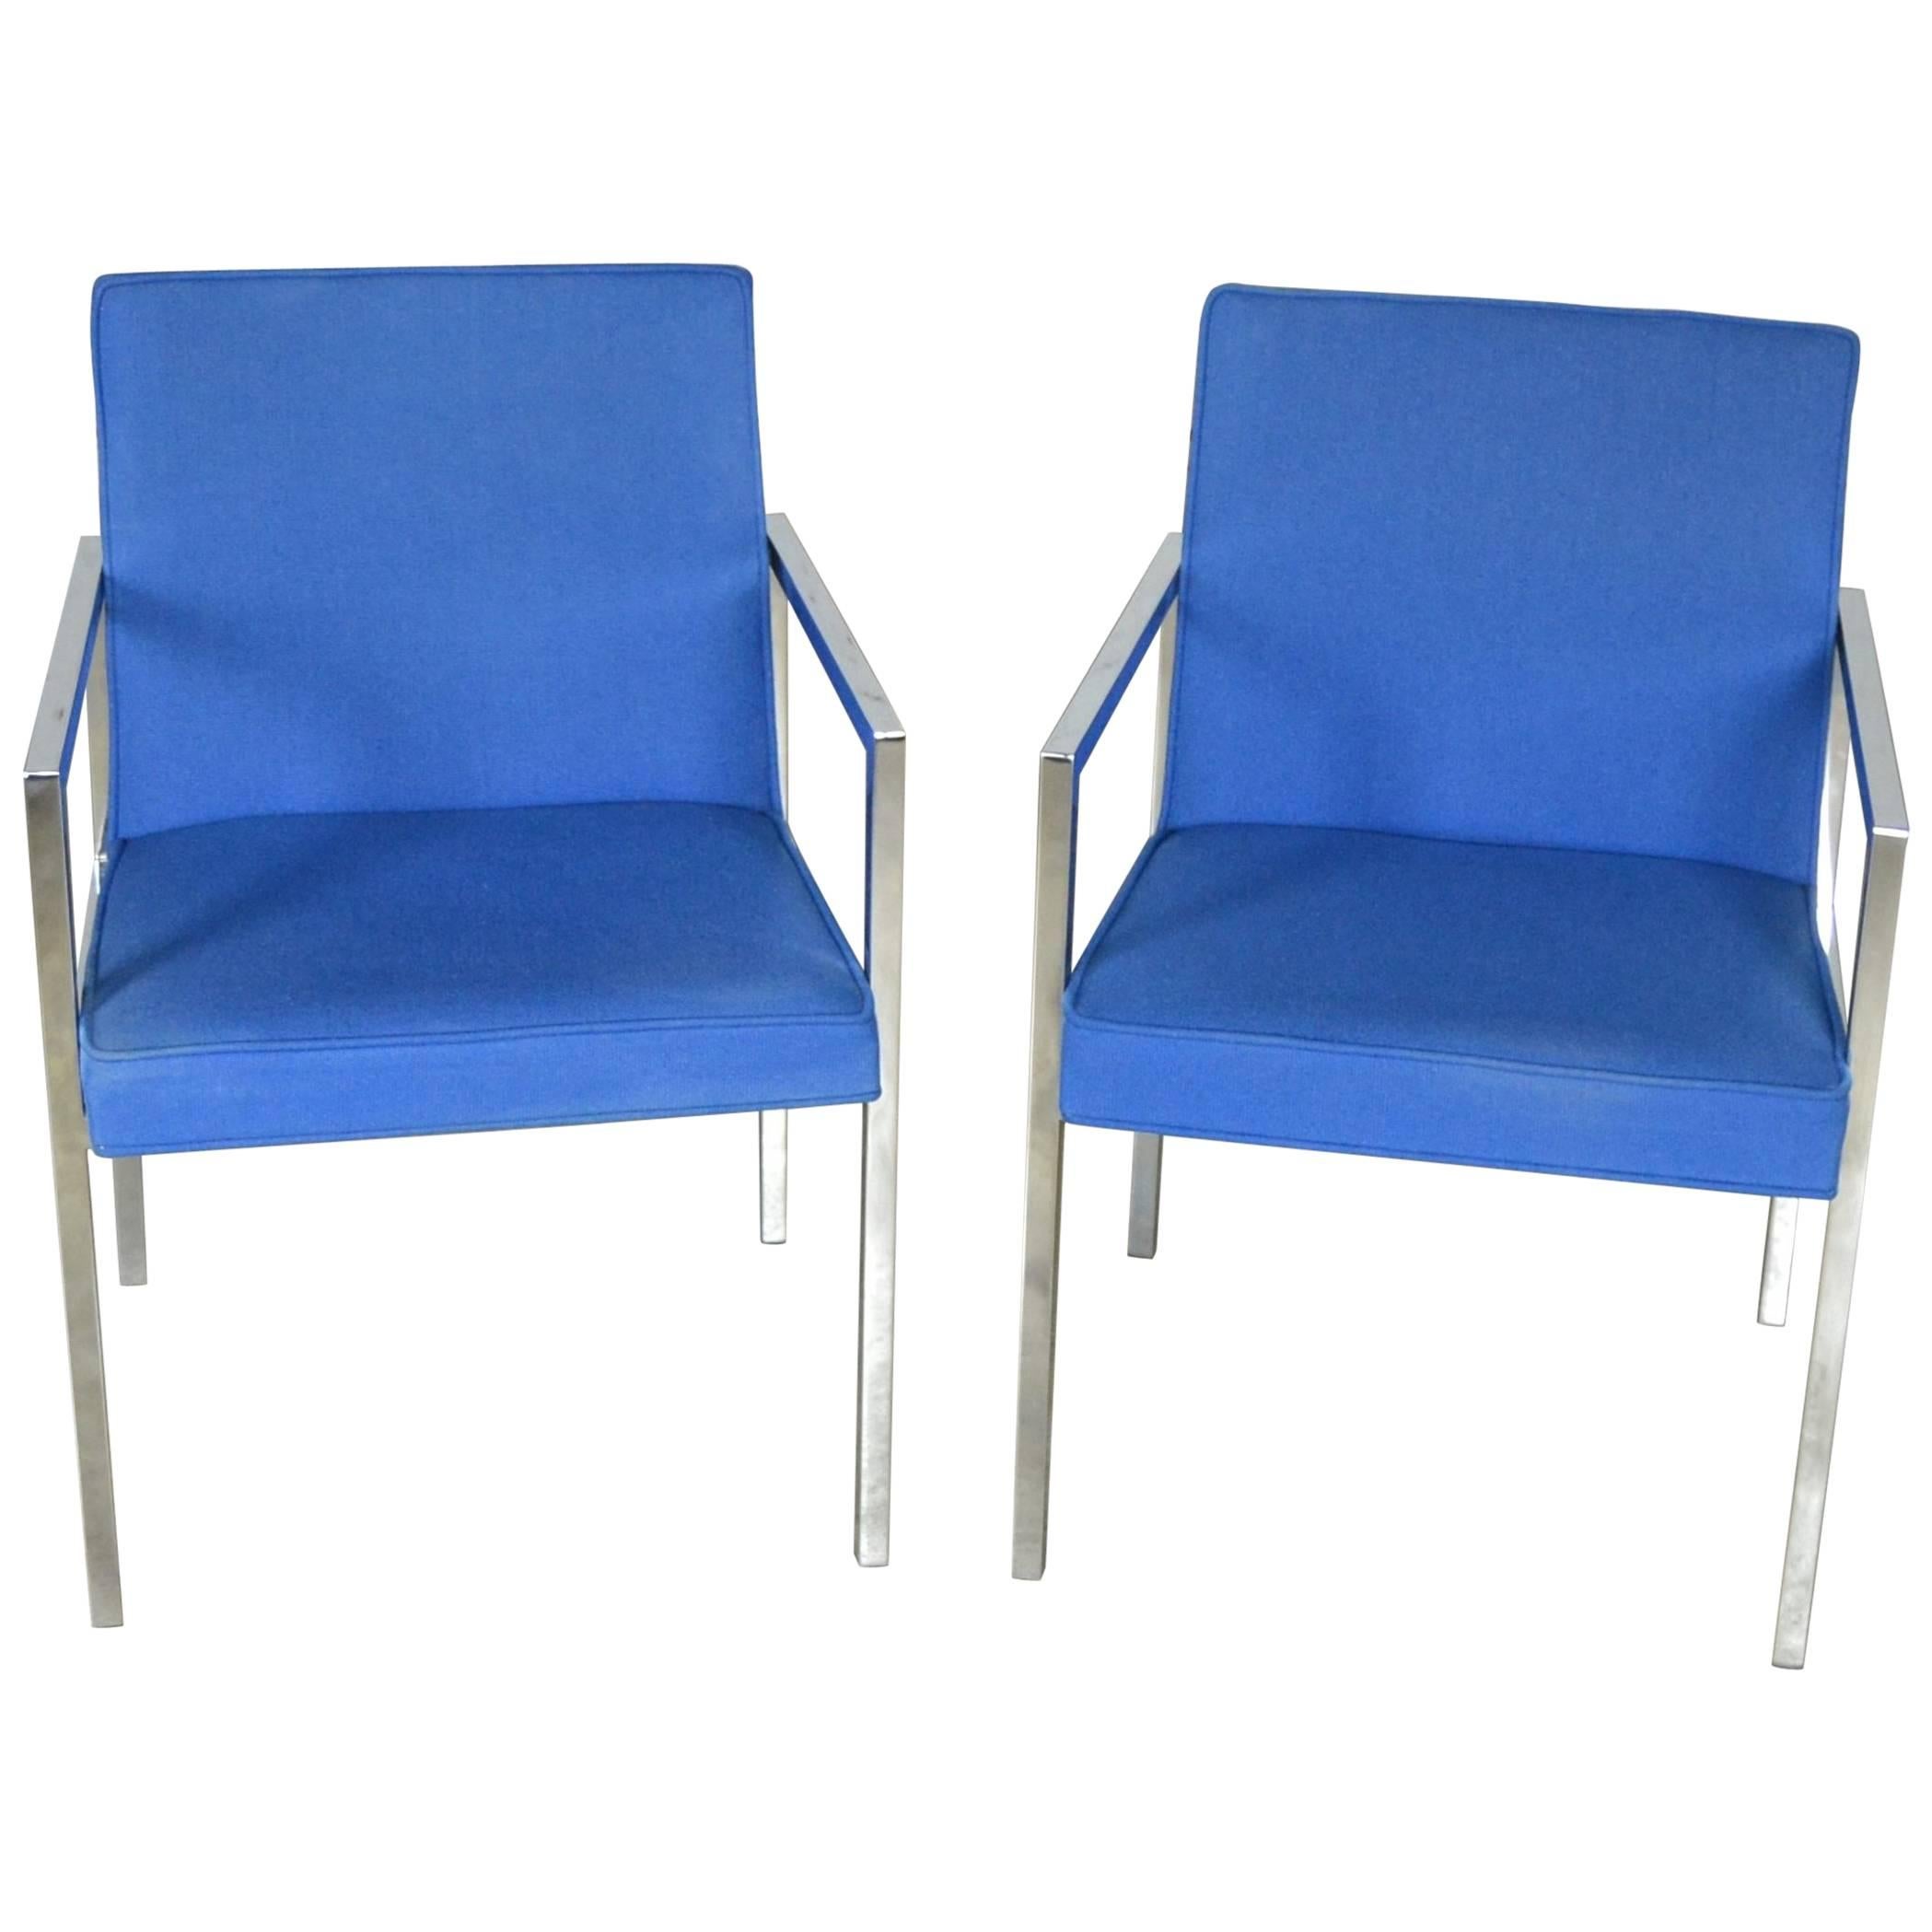 Vintage Pair of Royal Blue Milo Baughman Style Chrome Armchairs by Hibriten